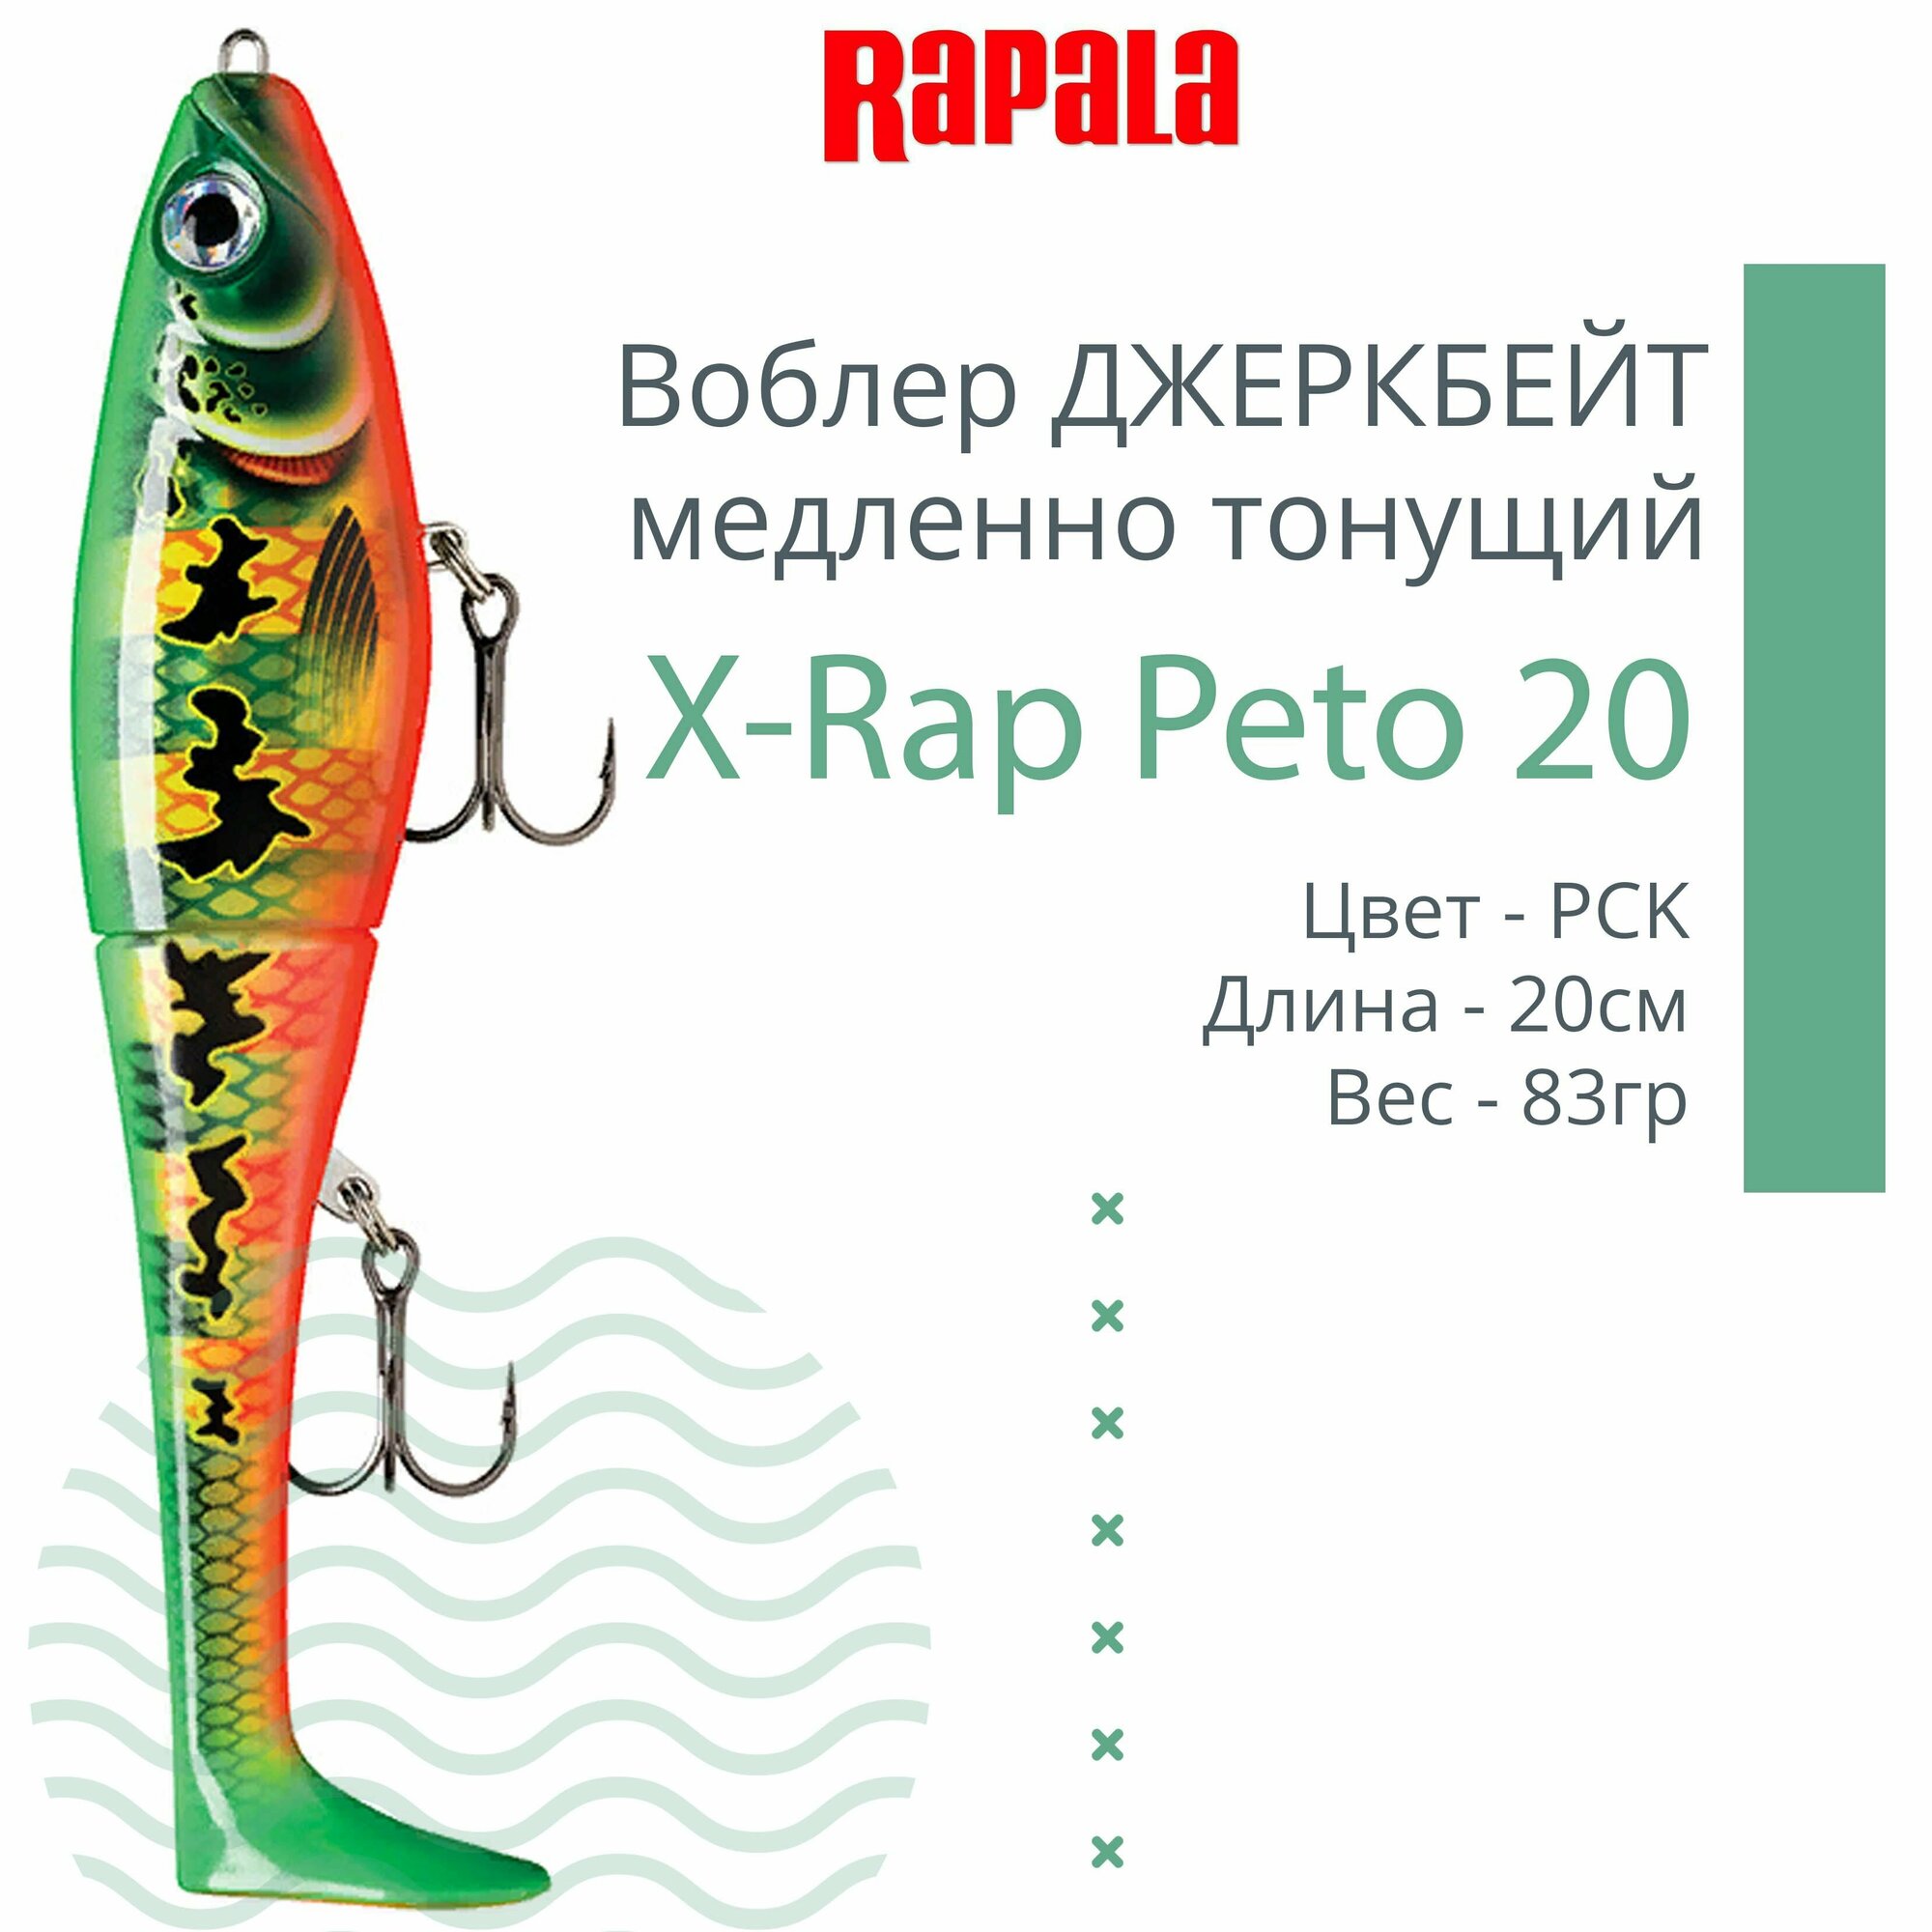 Воблер для рыбалки RAPALA X-Rap Peto 20, 20см, 83гр, цвет PCK, медленно тонущий